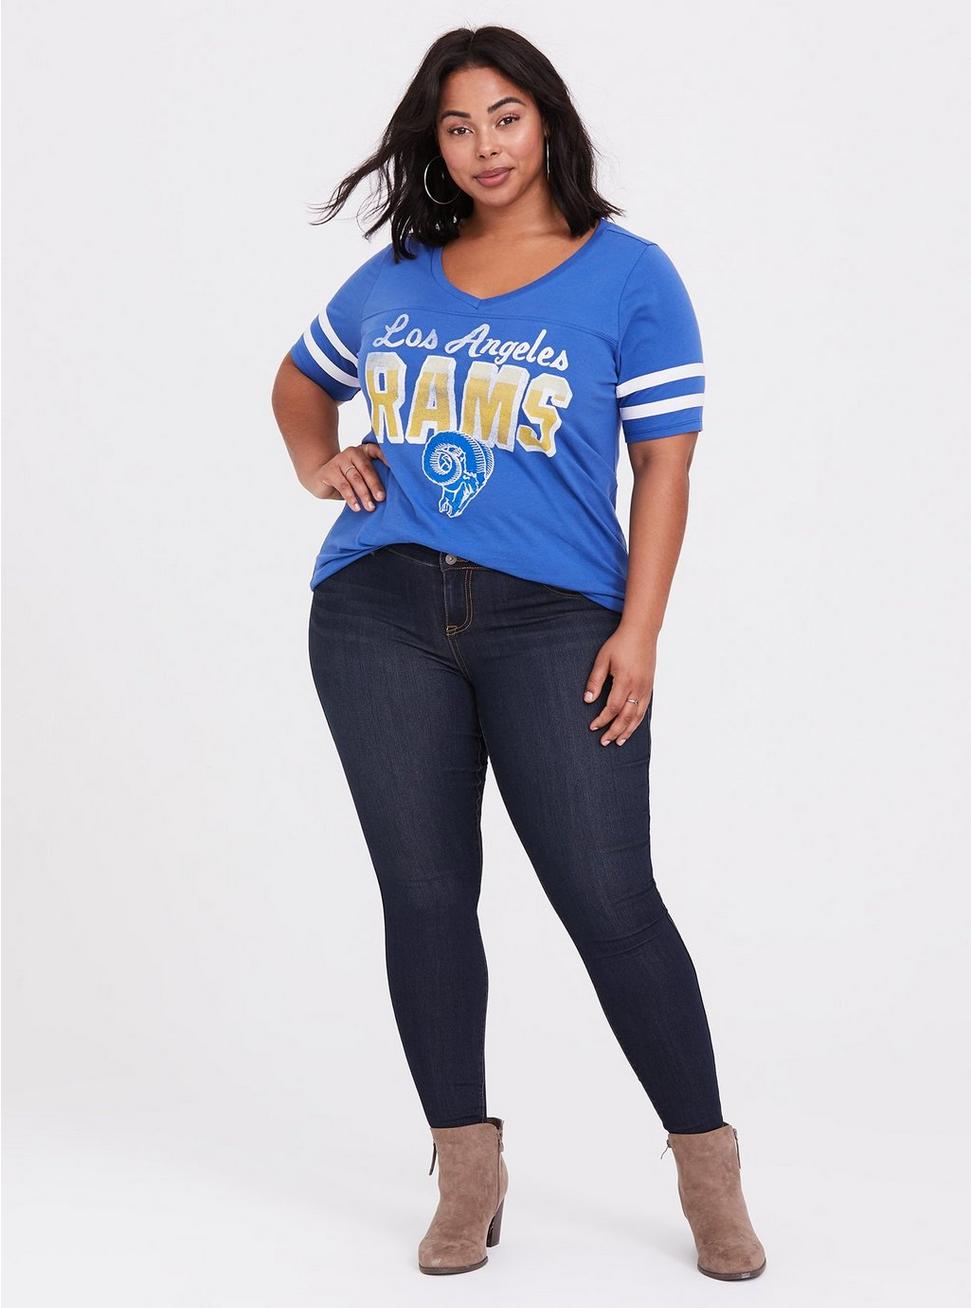 Los Angeles Rams - NFL Team Apparel Blue T-shirt - Size L Football LA Rams  Tee